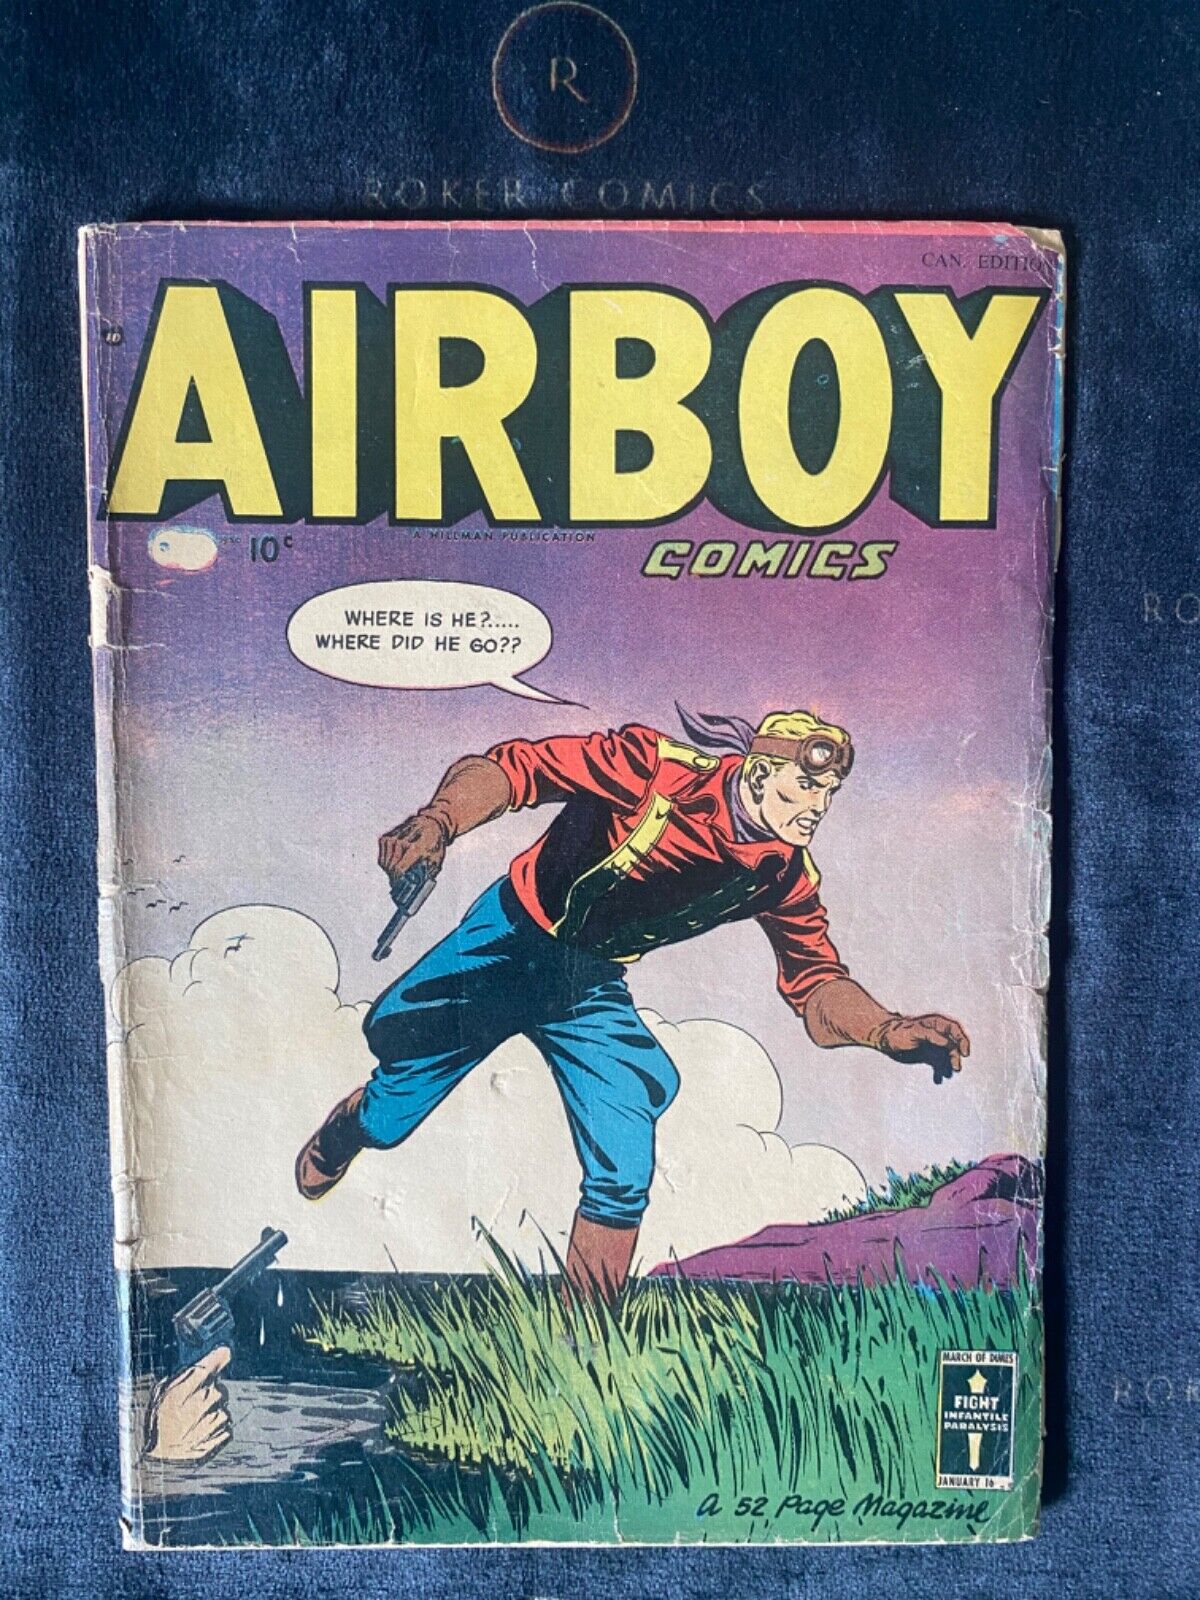 RARE 1950 AirBoy #1 (72)